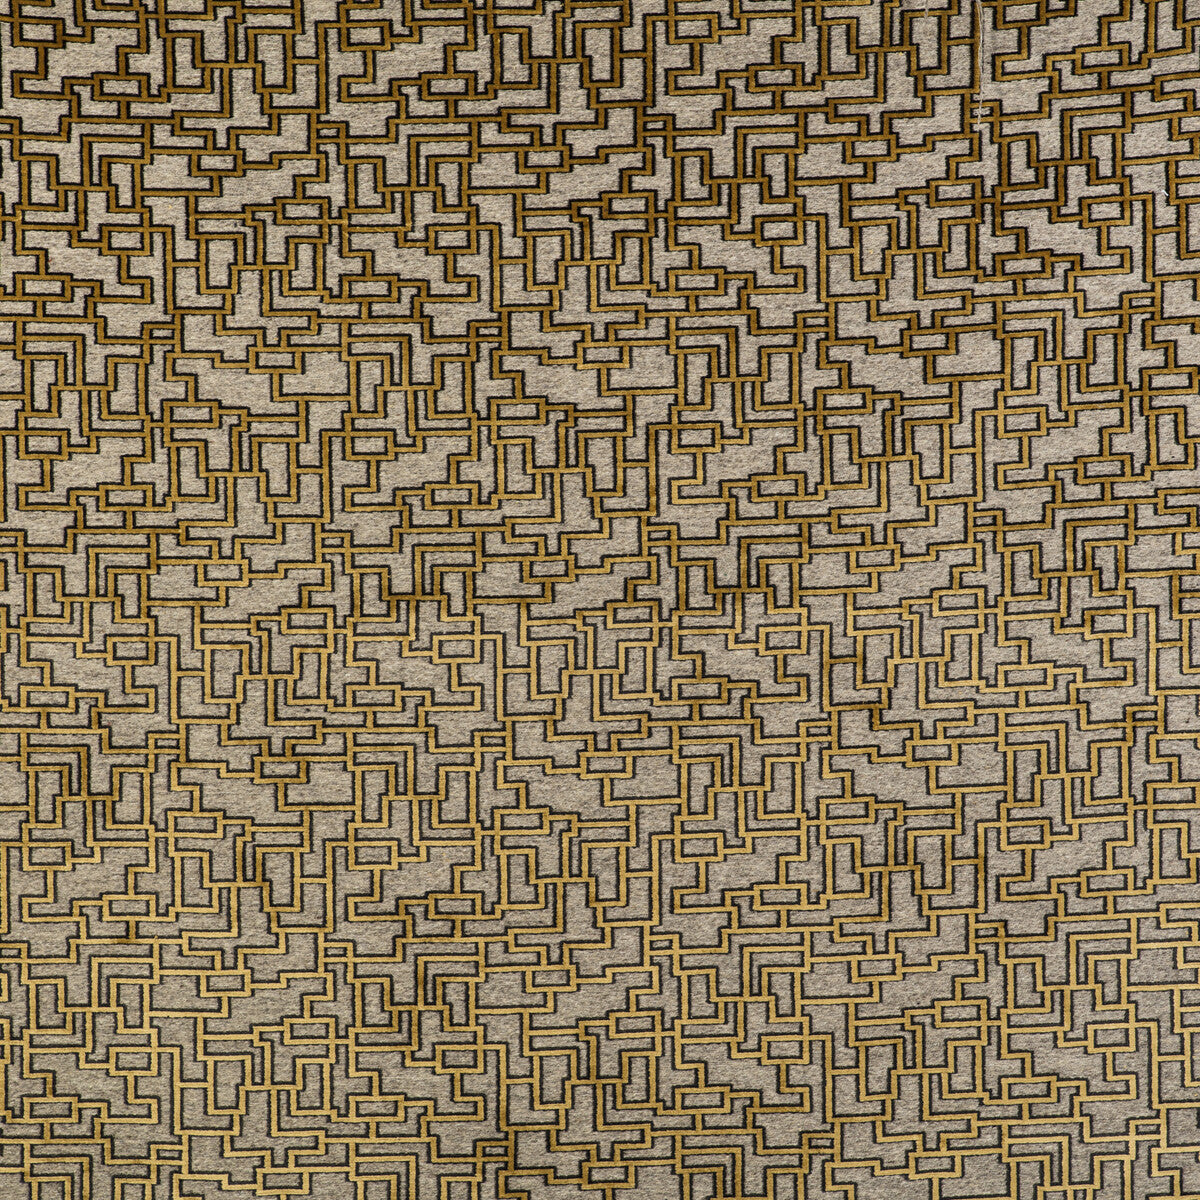 Laberinto fabric in amarillo color - pattern GDT5501.001.0 - by Gaston y Daniela in the Gaston Libreria collection